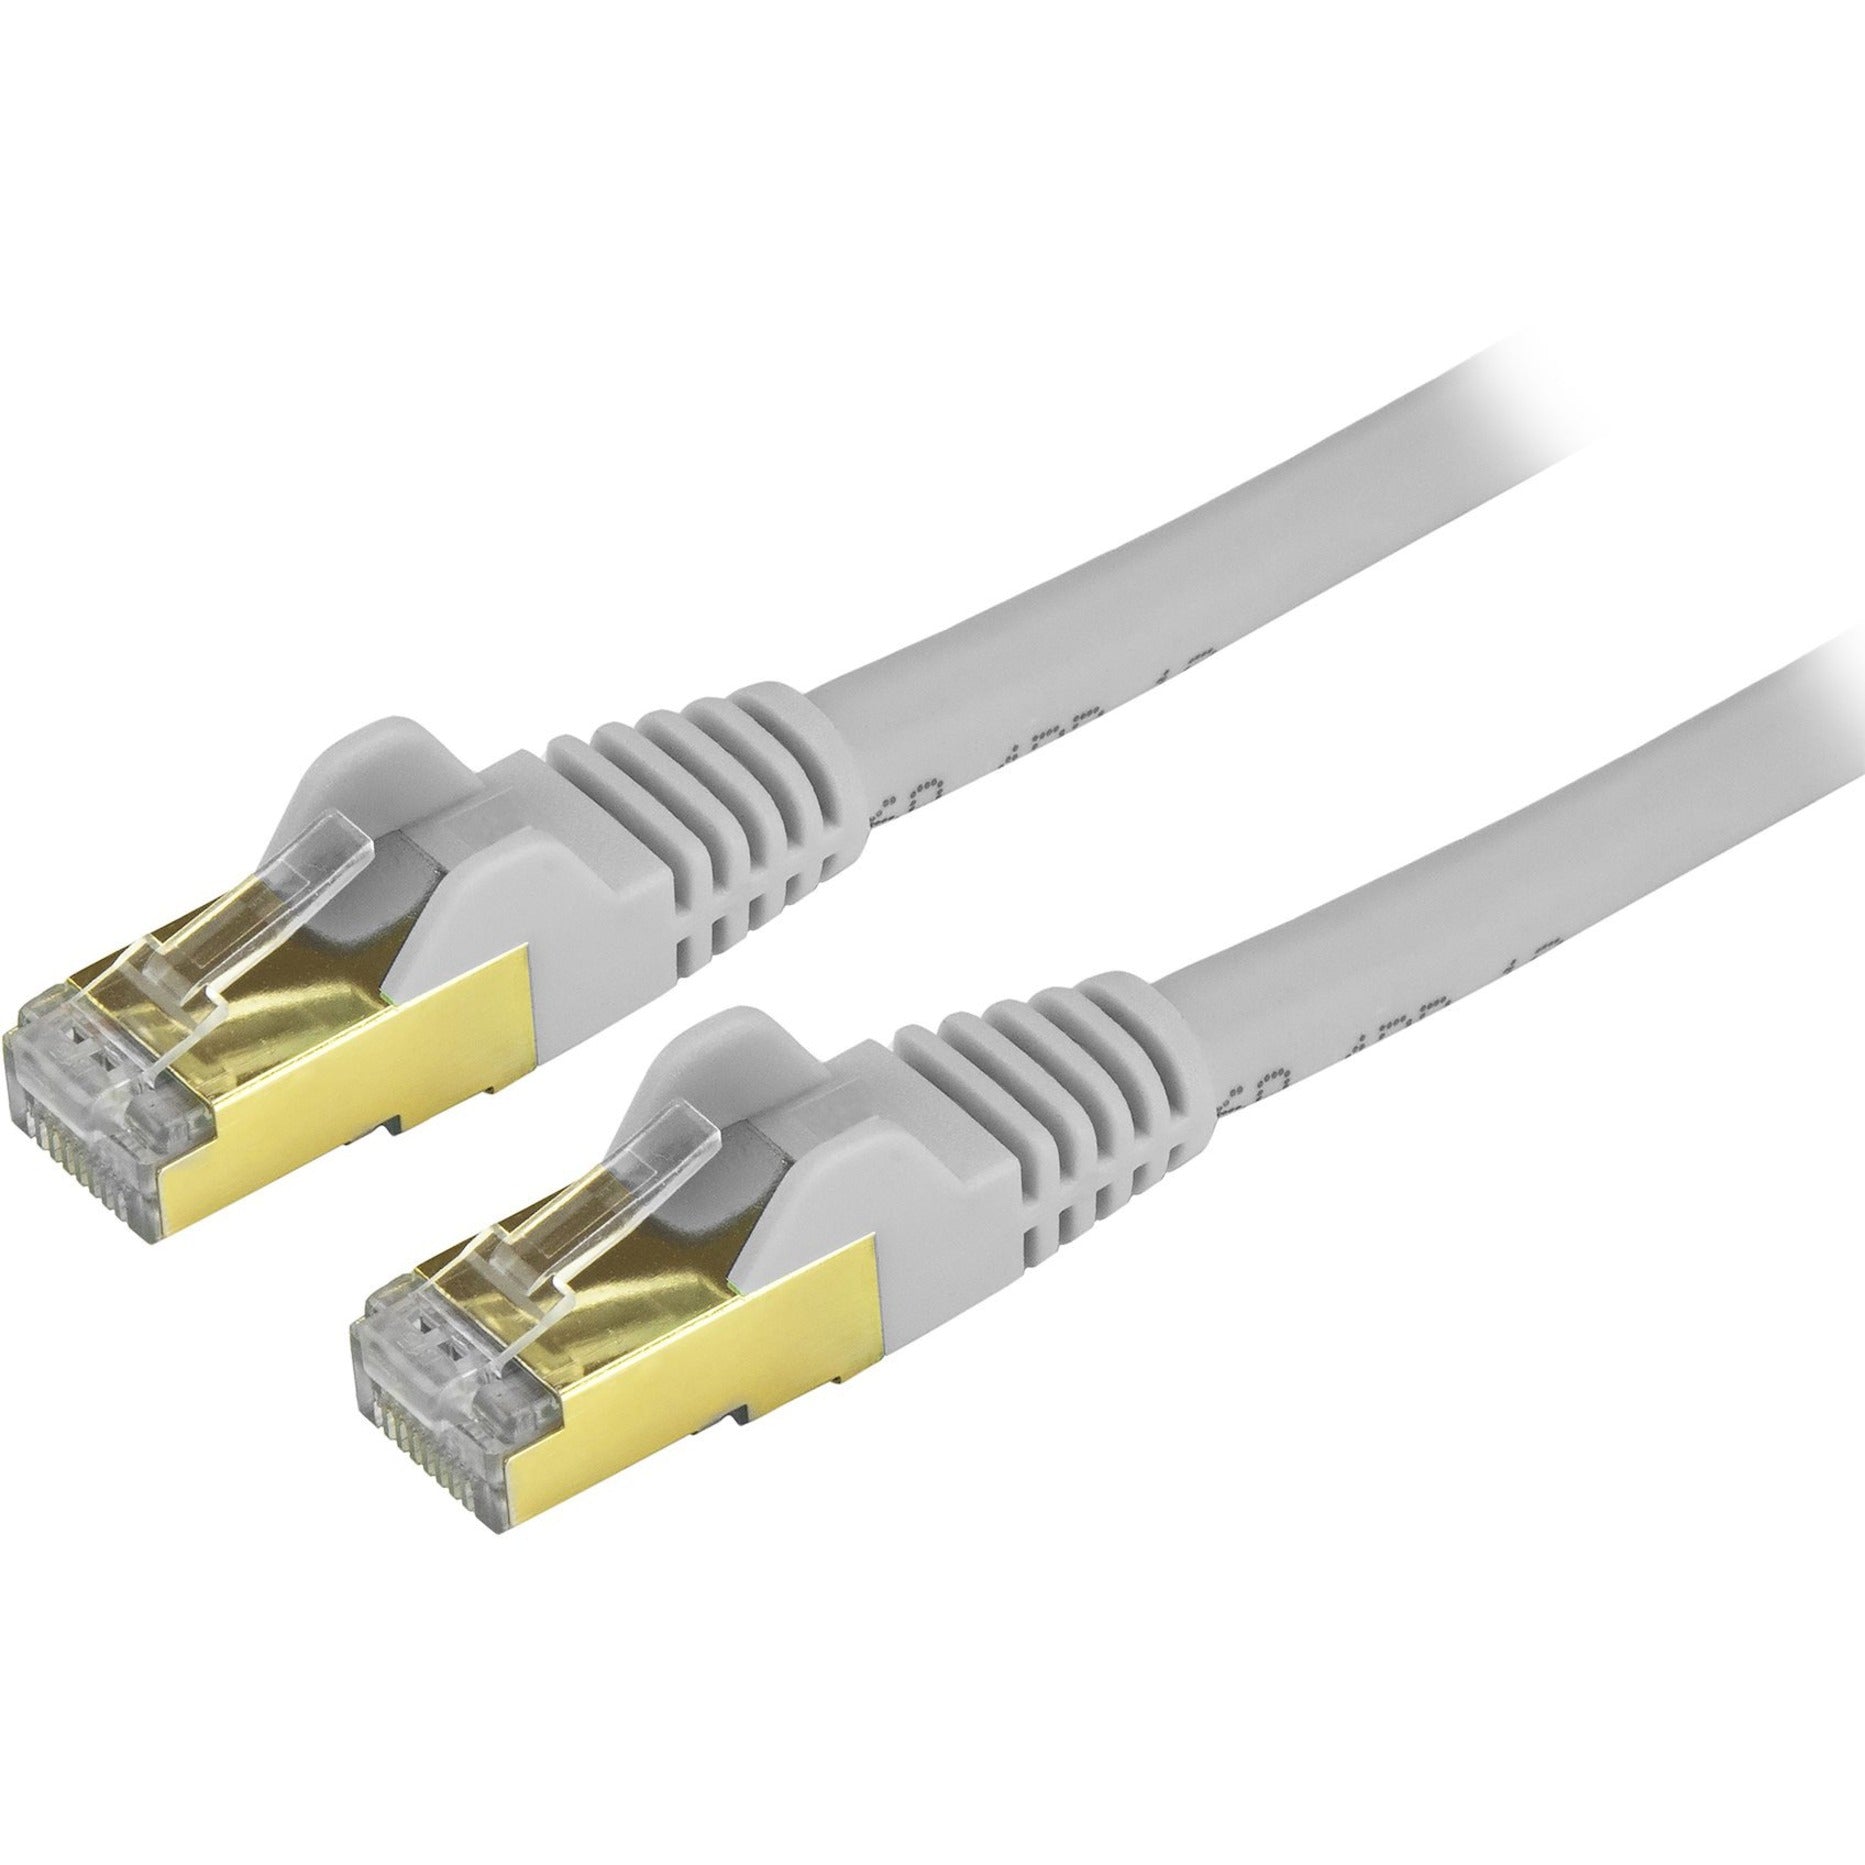 StarTech.com -> スターテック C6ASPAT6INGR -> C6ASPAT6INGR Cat6a Ethernet Patch Cable -> Cat6a イーサネット パッチ ケーブル Shielded (STP) -> シールド（STP） 6 in. -> 6 インチ Gray -> グレー Short Ethernet Cord -> 短いイーサネットコード